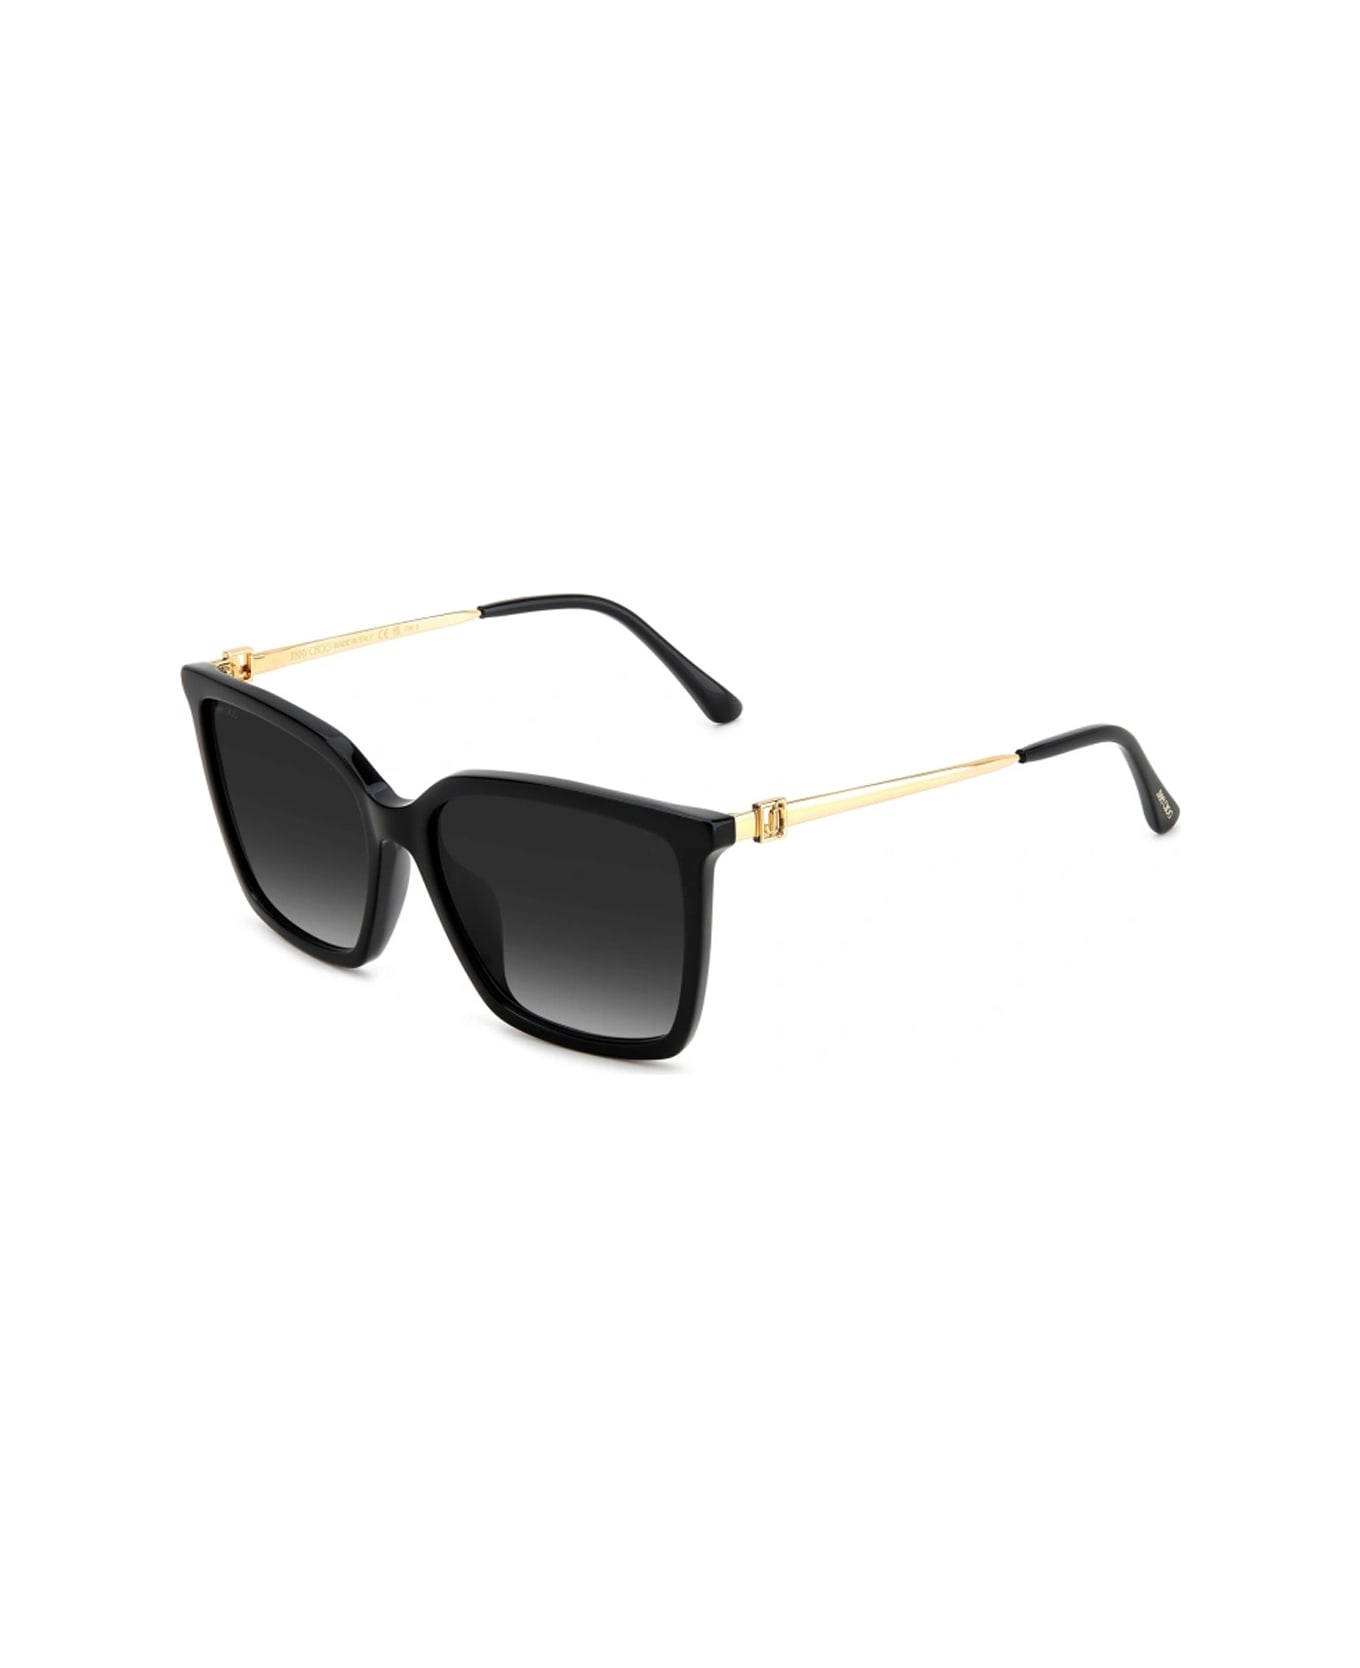 Jimmy Choo Eyewear Jc Totta/g/s 807/9o Black Sunglasses - Nero